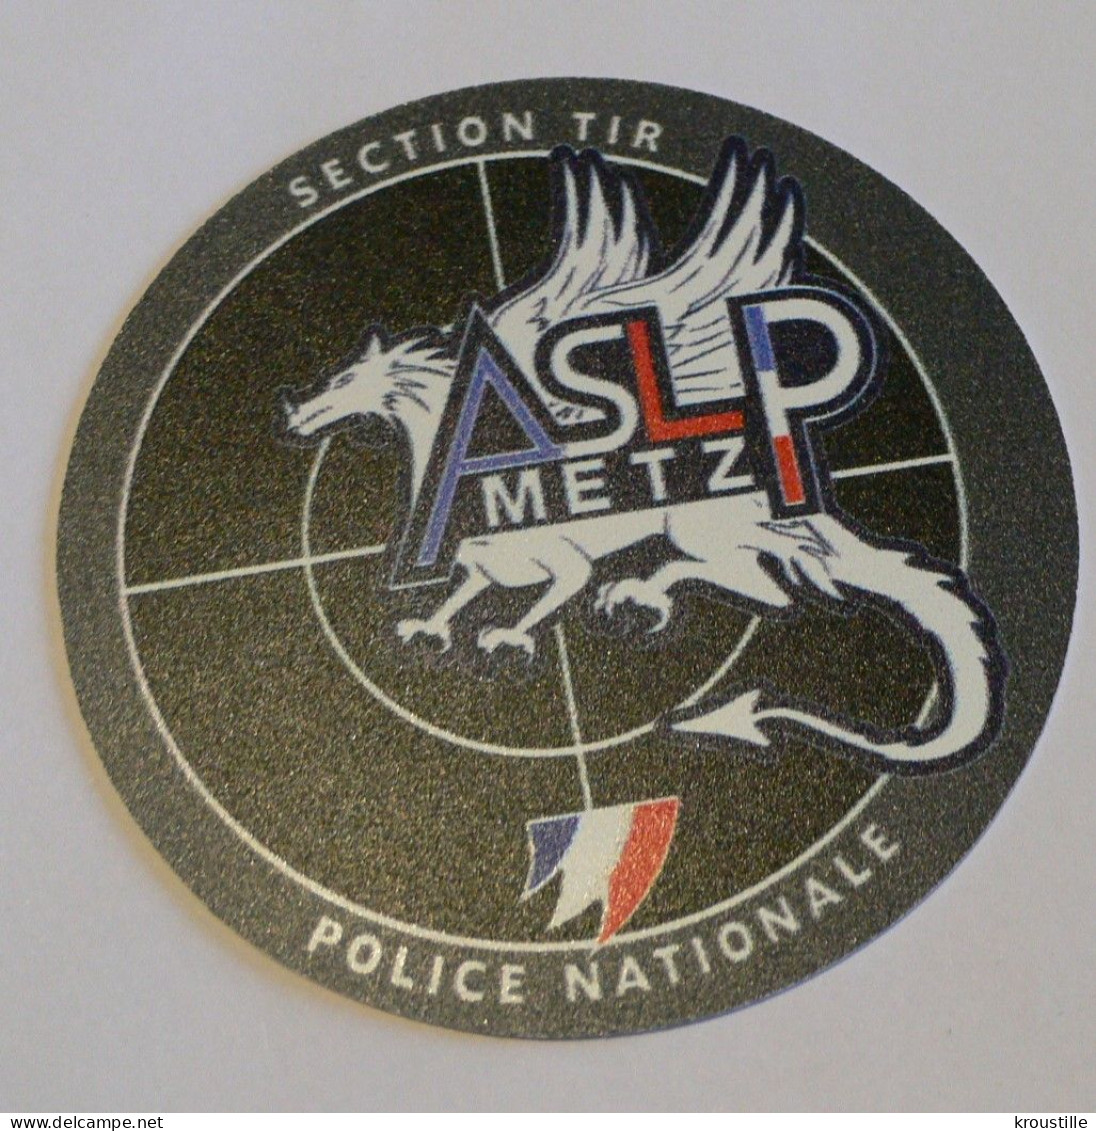 THEME TIR SPORTIF : AUTOCOLLANT ASLP METZ - SECTION TIR POLICE NATIONALE - Autocollants